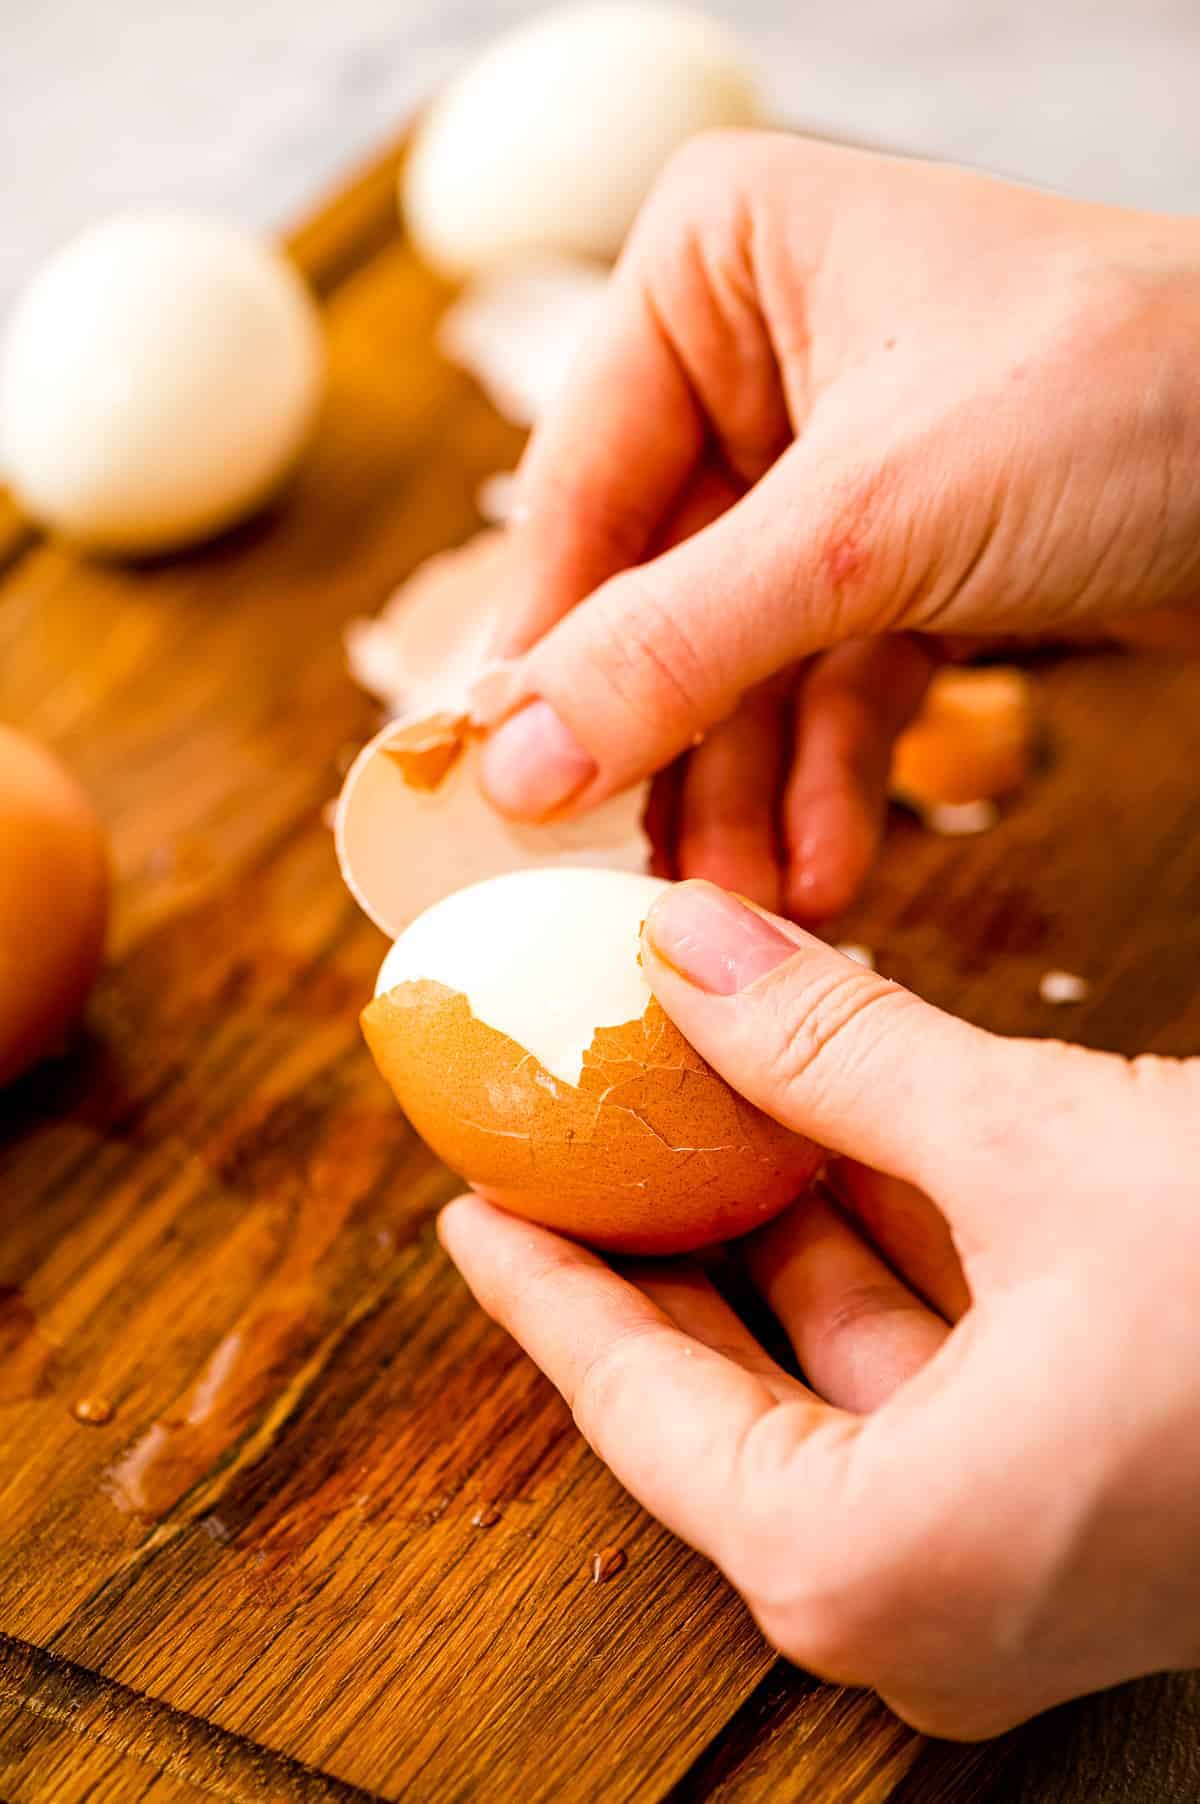 Hands peeling a hard boiled egg